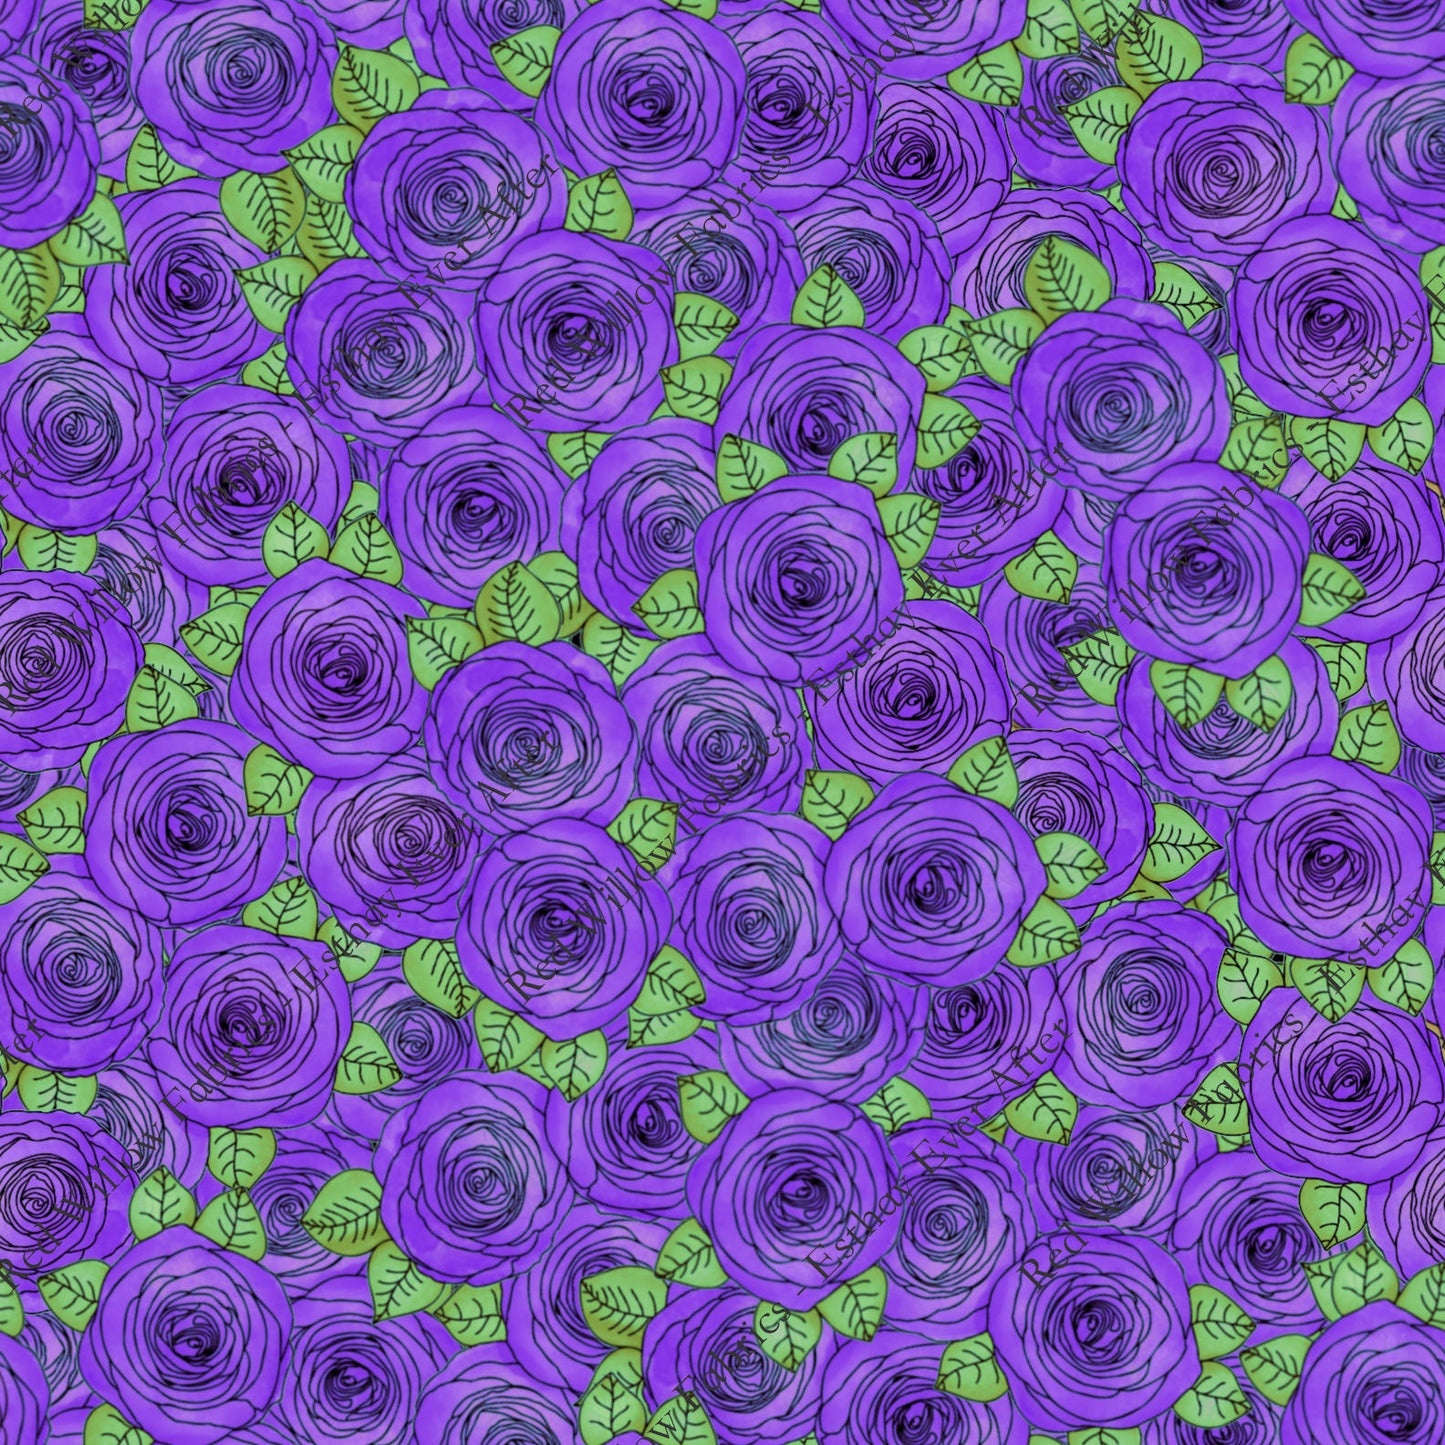 EEA - Crowded Watercolor Roses Purple